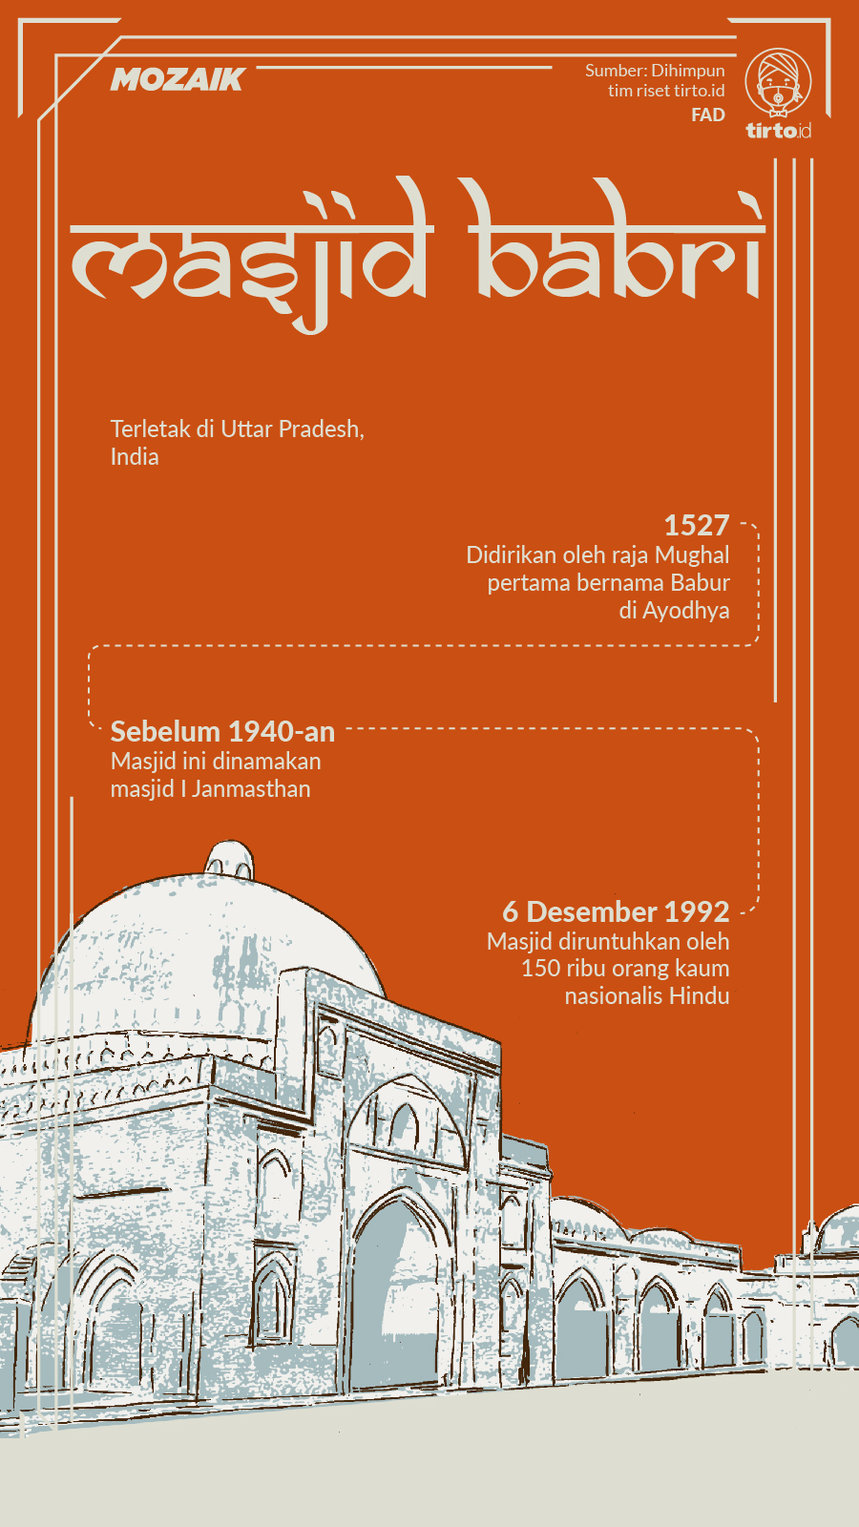 Infografik MOZAIK Masjid Babri